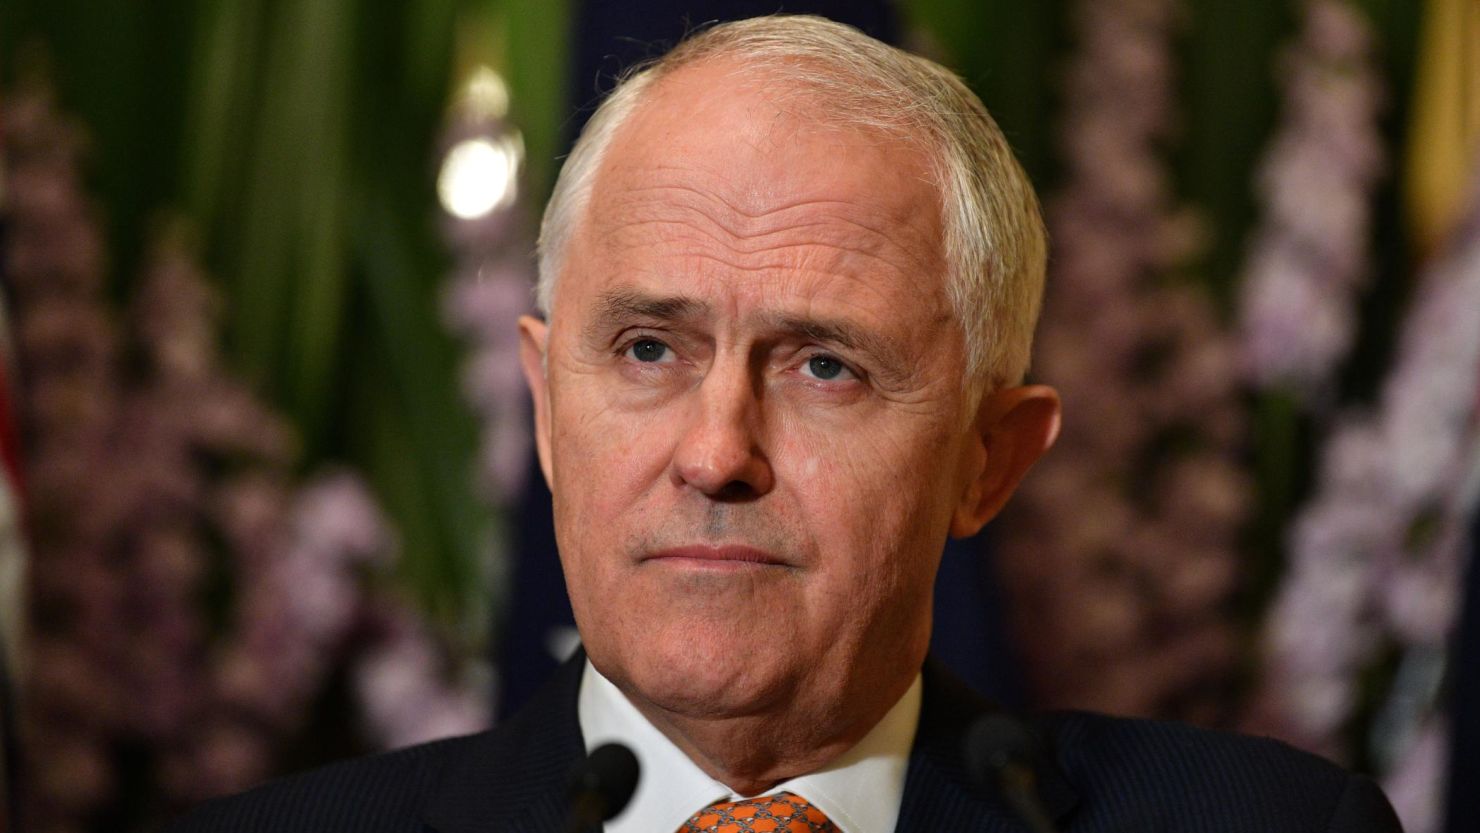 Australian Prime Minister Malcolm Turnbull speaks during a press conference in Sydney on November 5, 2017.